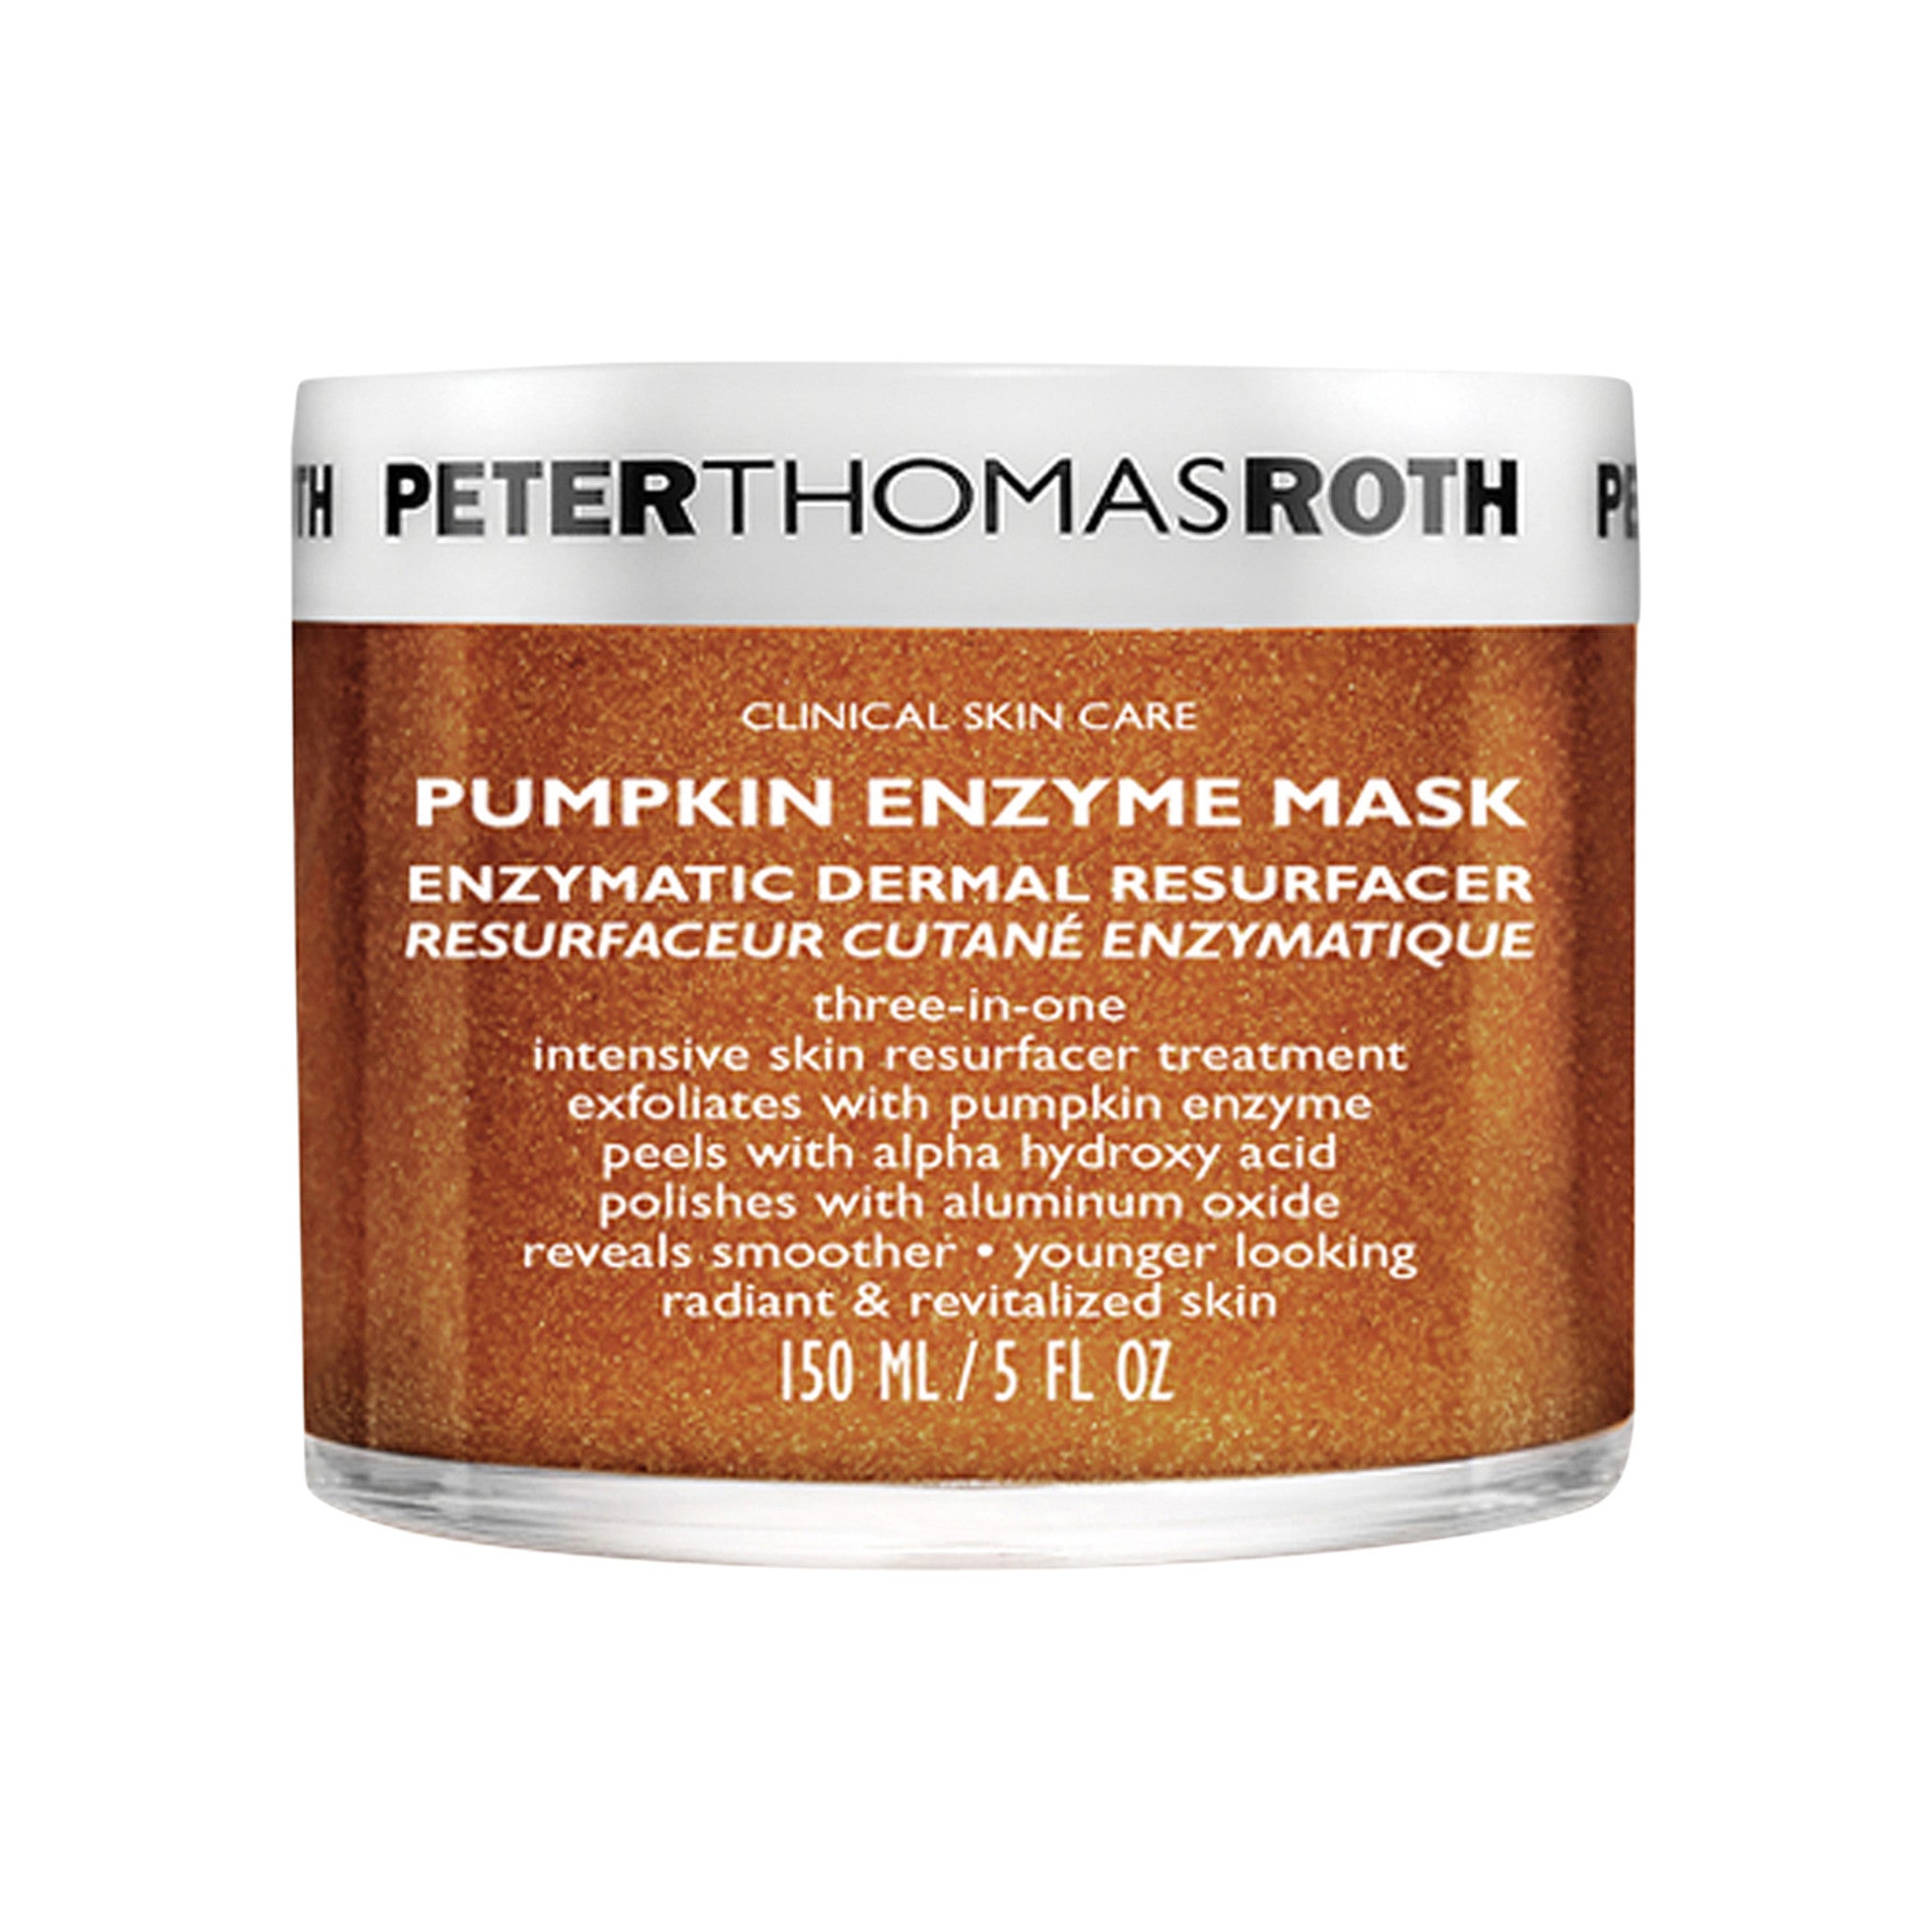 Peter Thomas Roth Pumpkin Enzyme Mask main image.